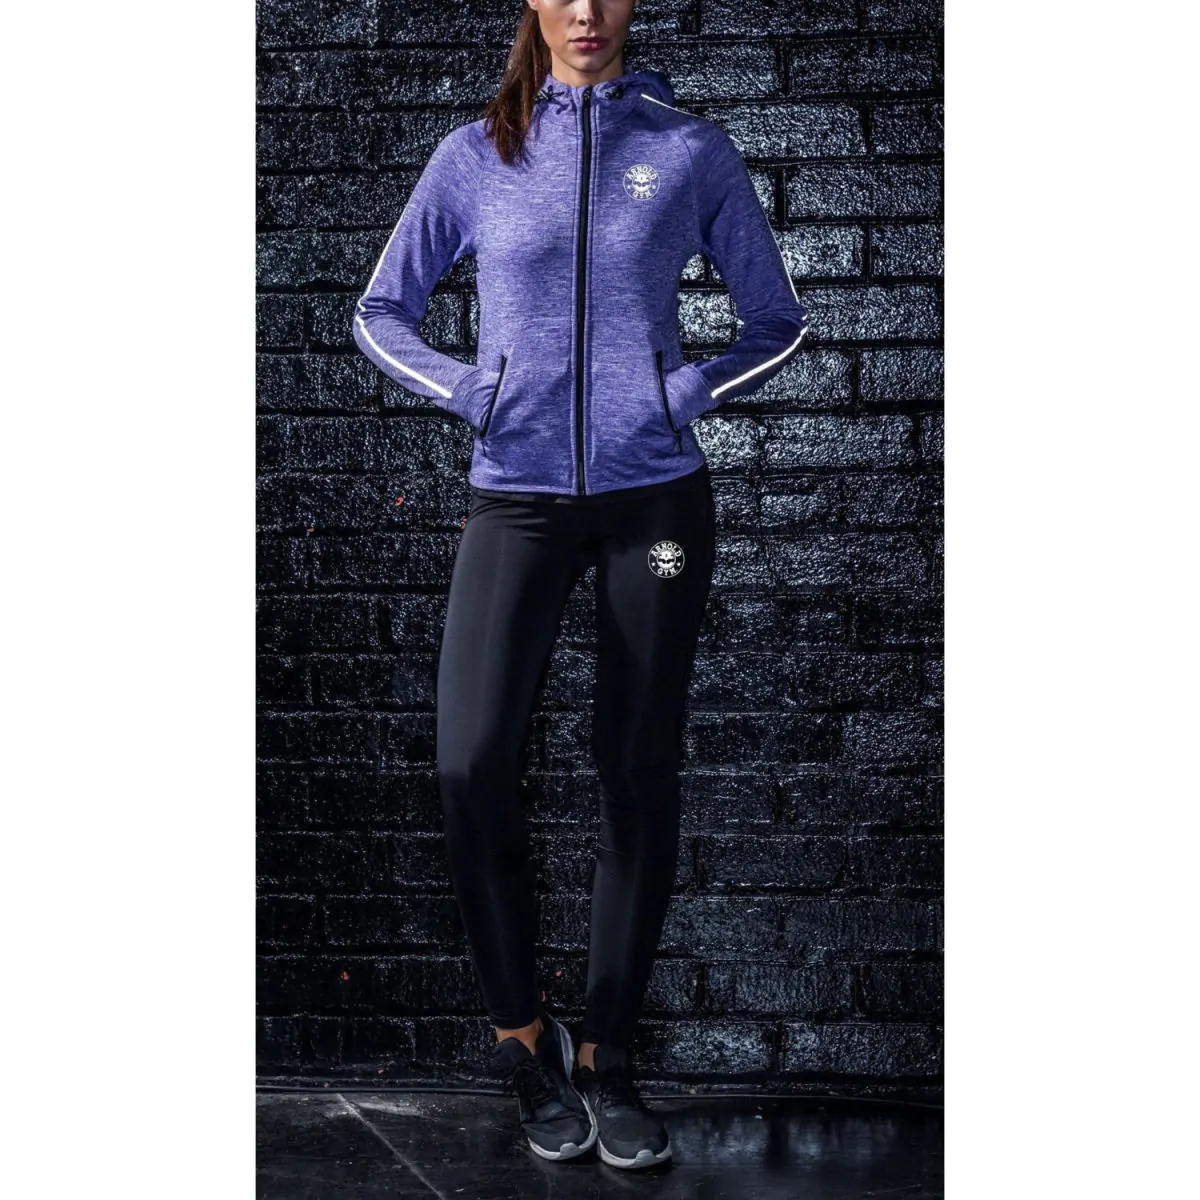 0000417 womens reflective hooded light weight purple jacket